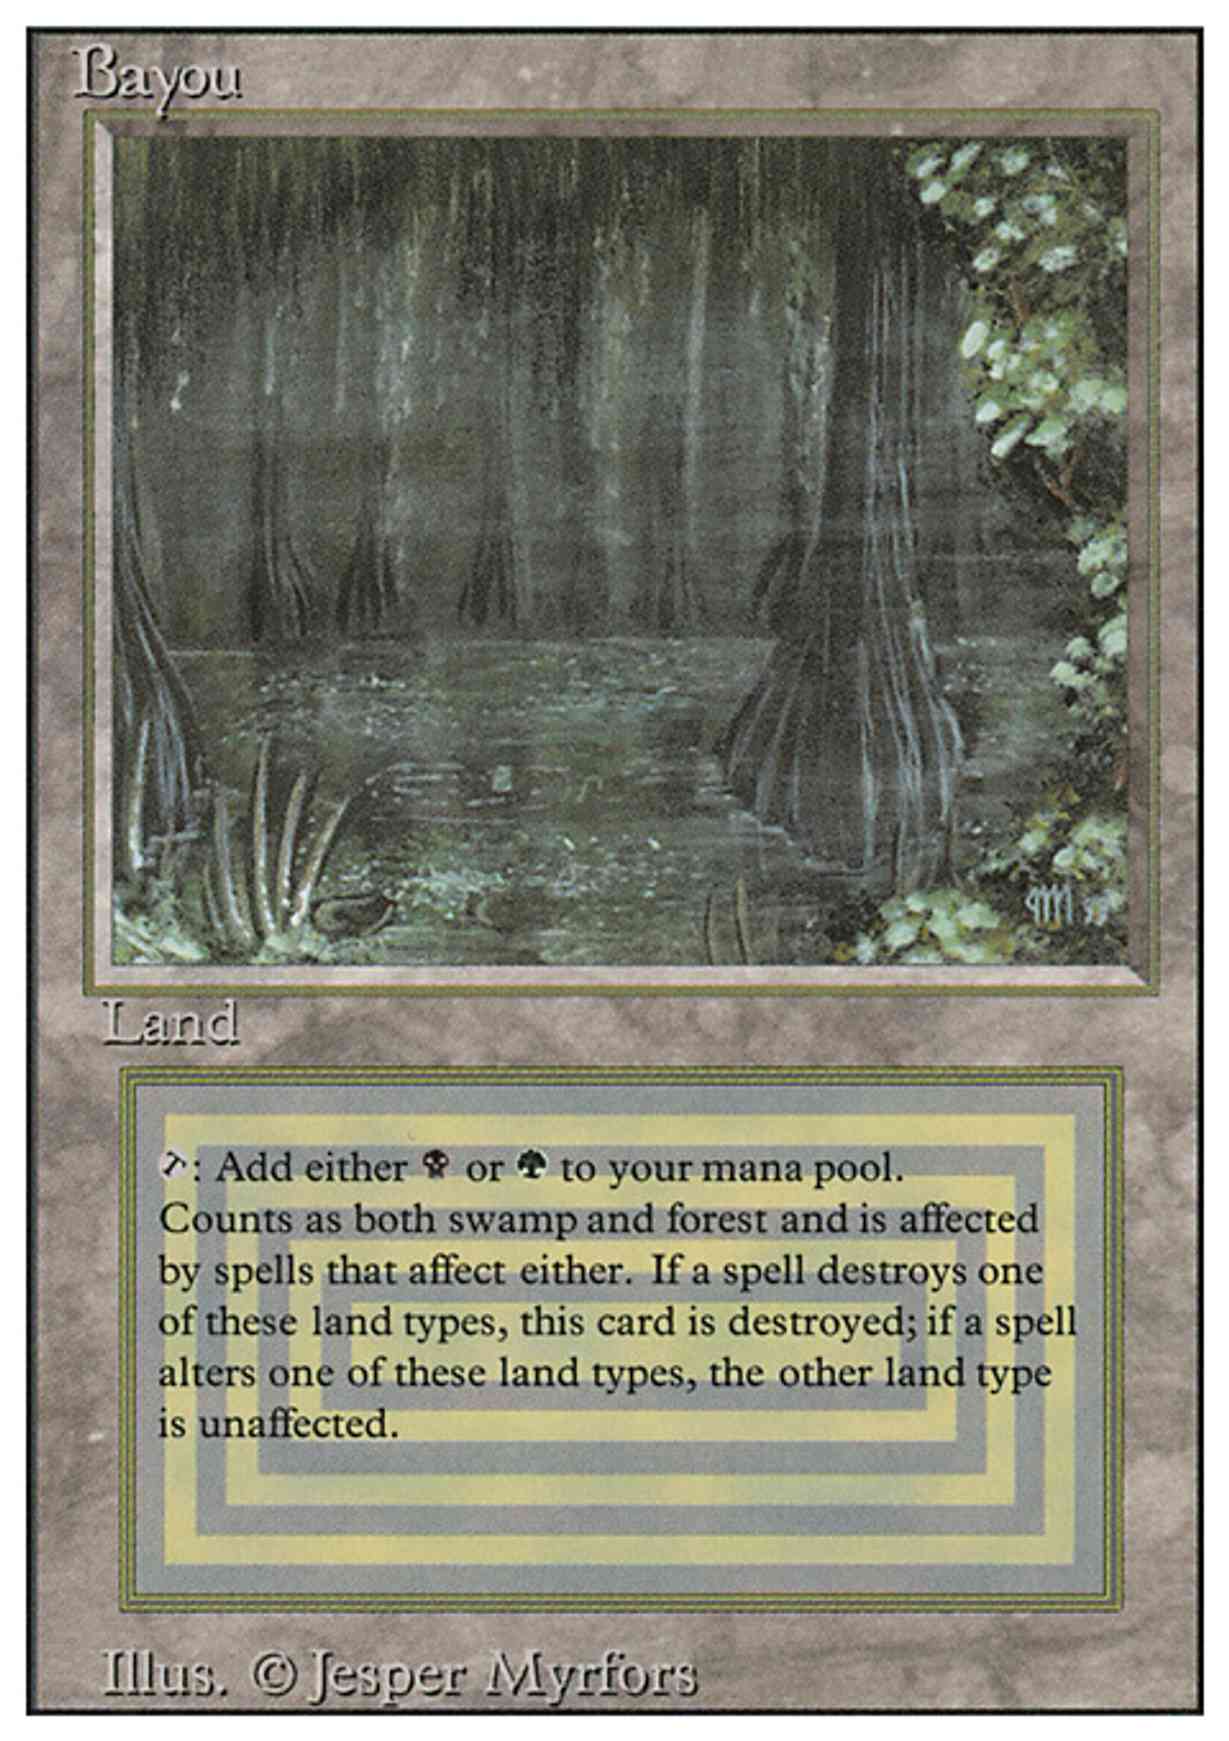 Bayou magic card front